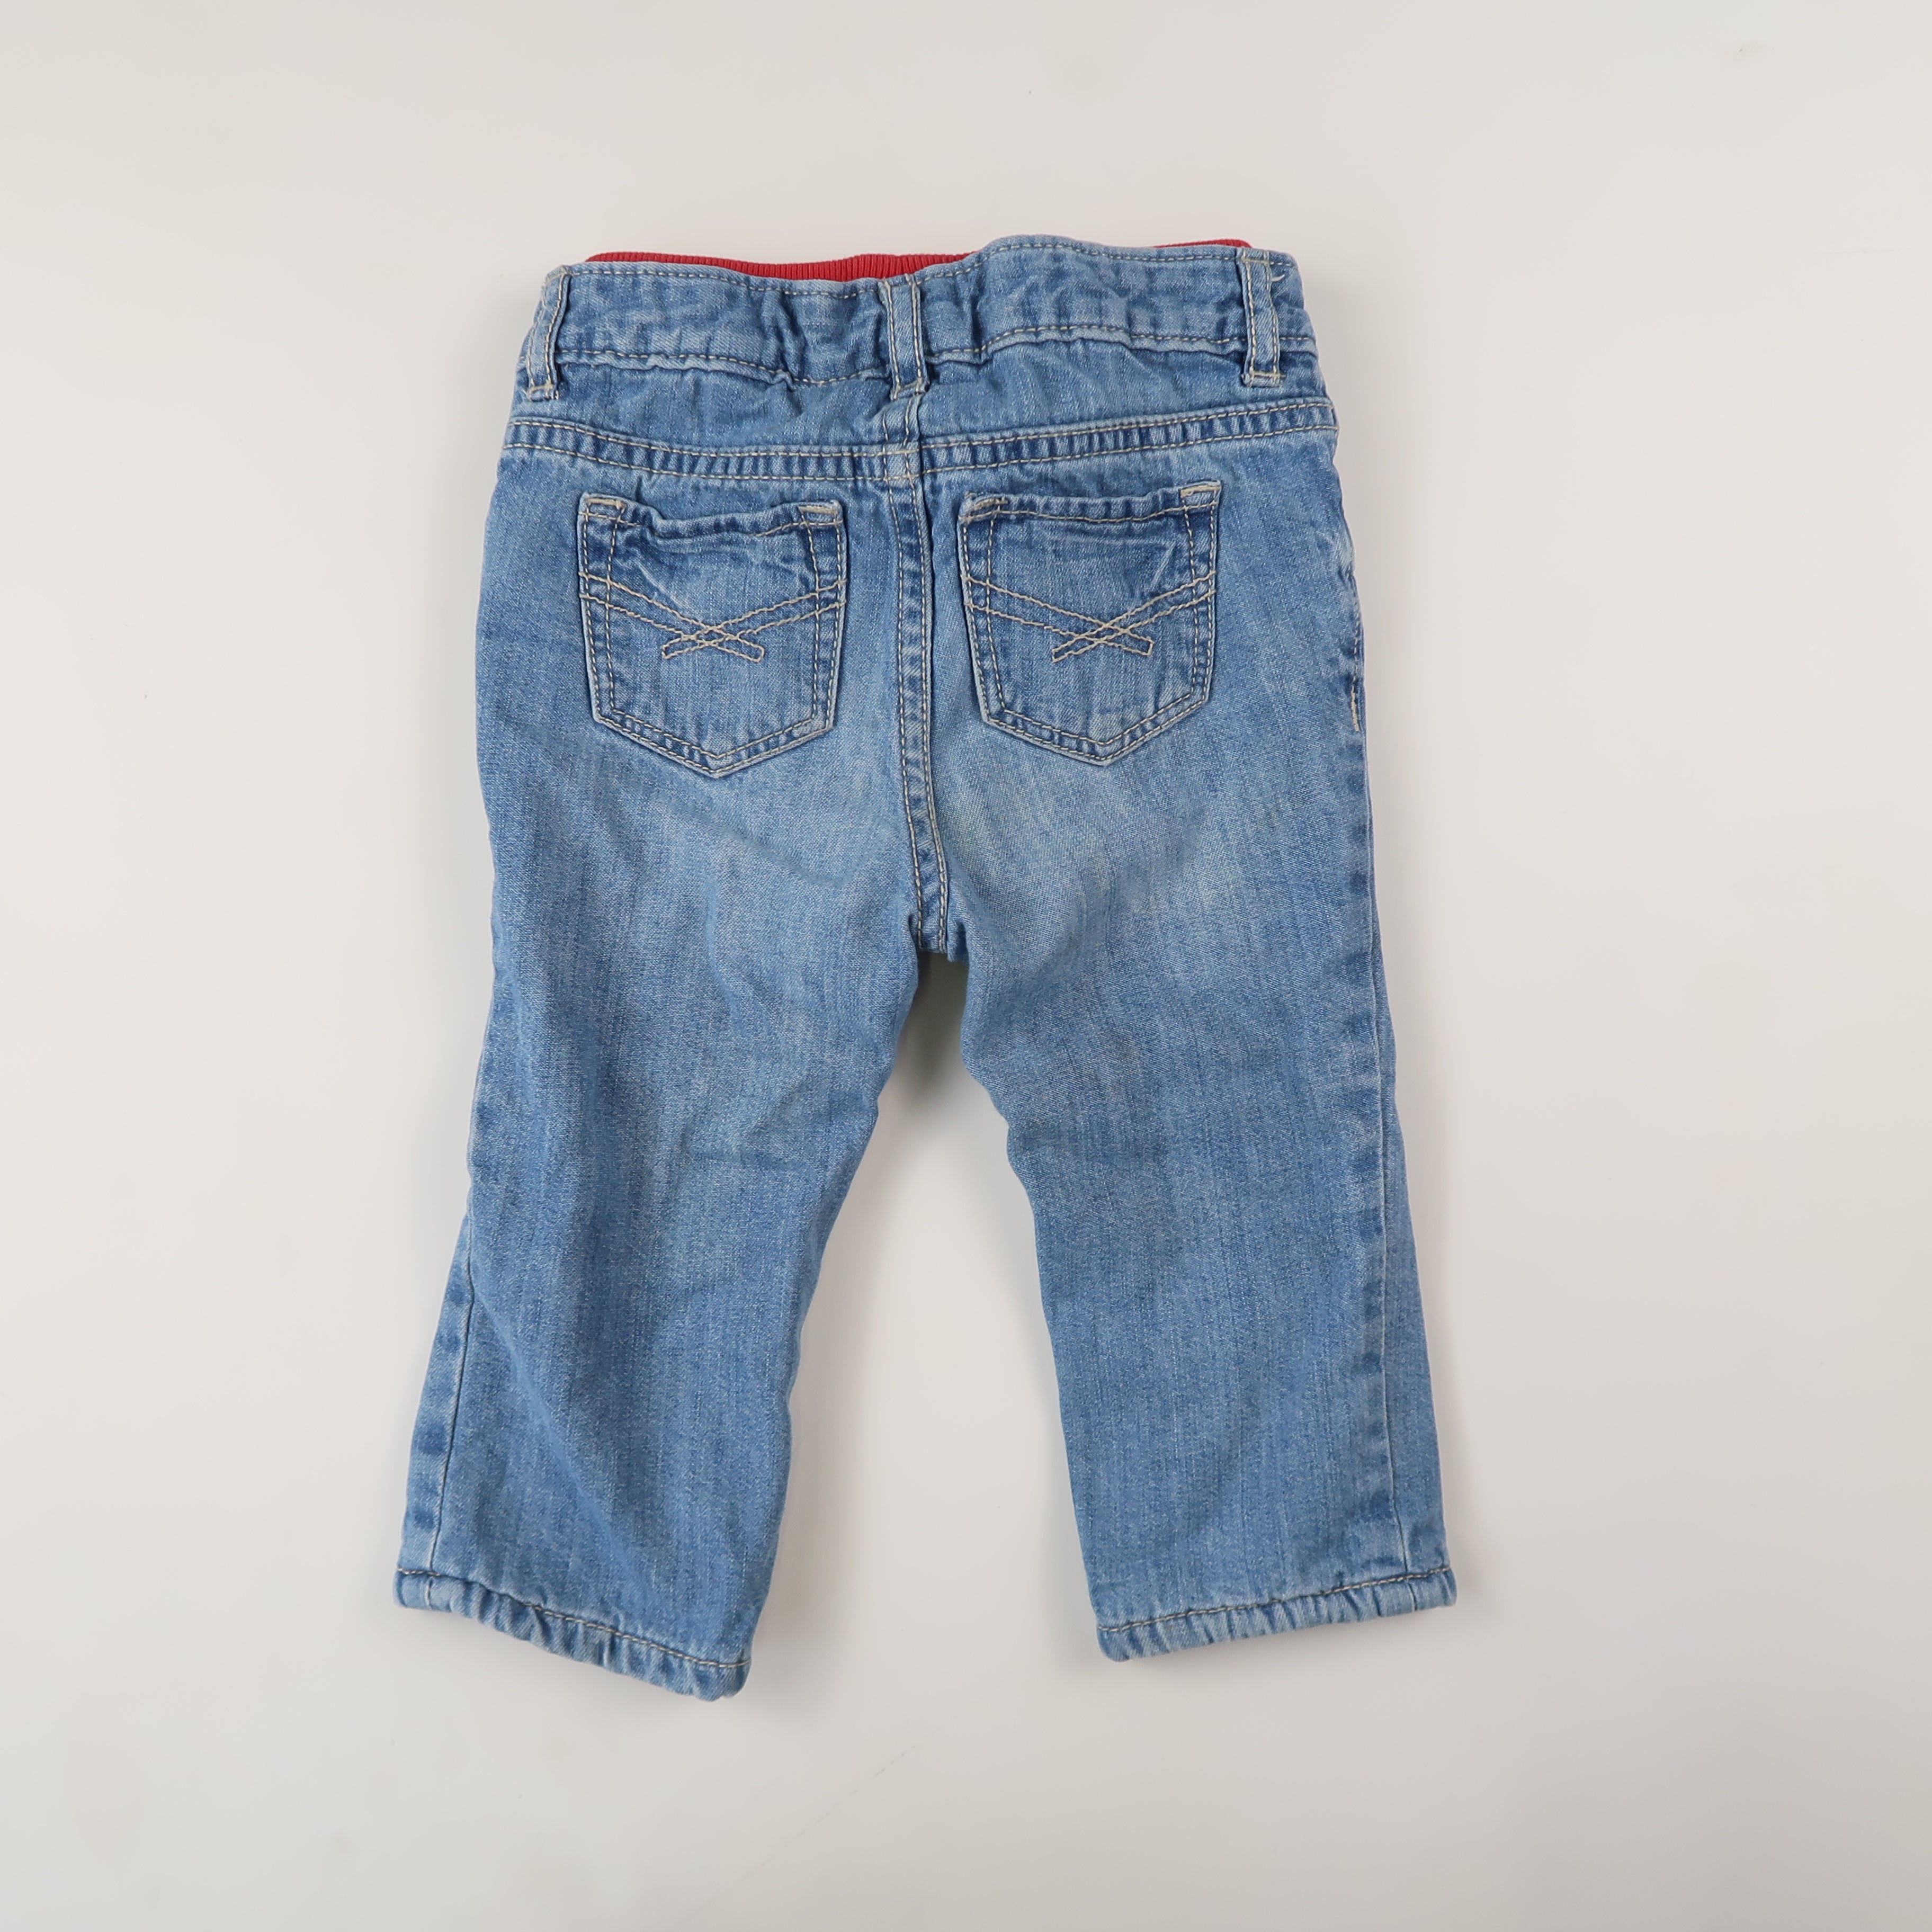 Gap - Fleece Lined Pants (12-18M)